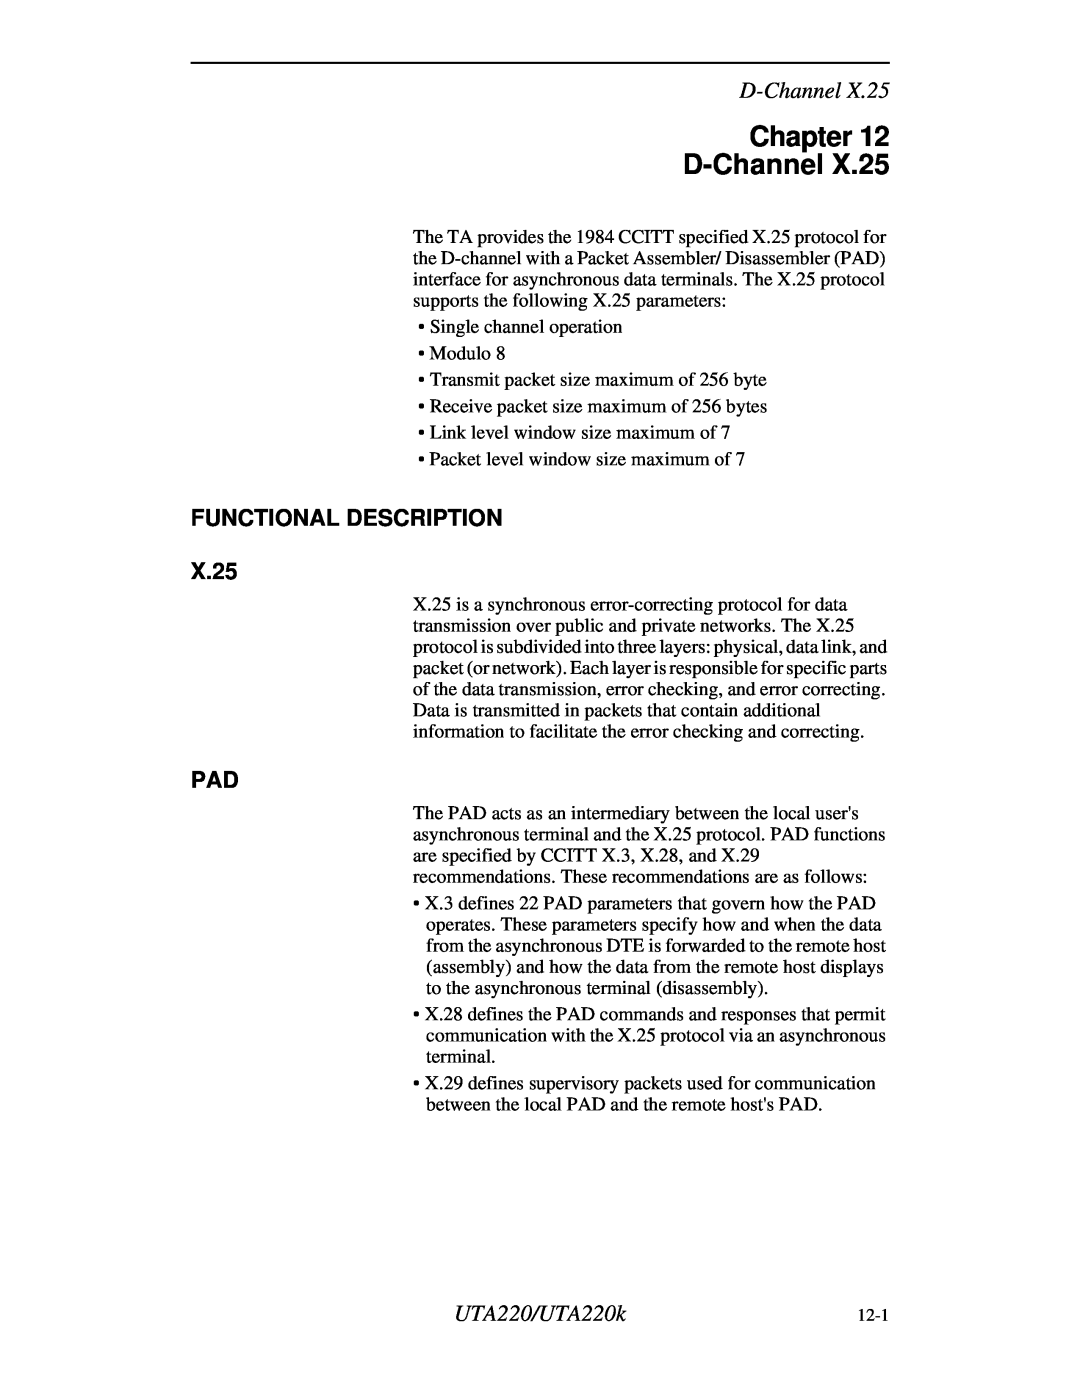 Northern UTA220/UTA220k manual Chapter D-Channel, FUNCTIONAL DESCRIPTION X.25 